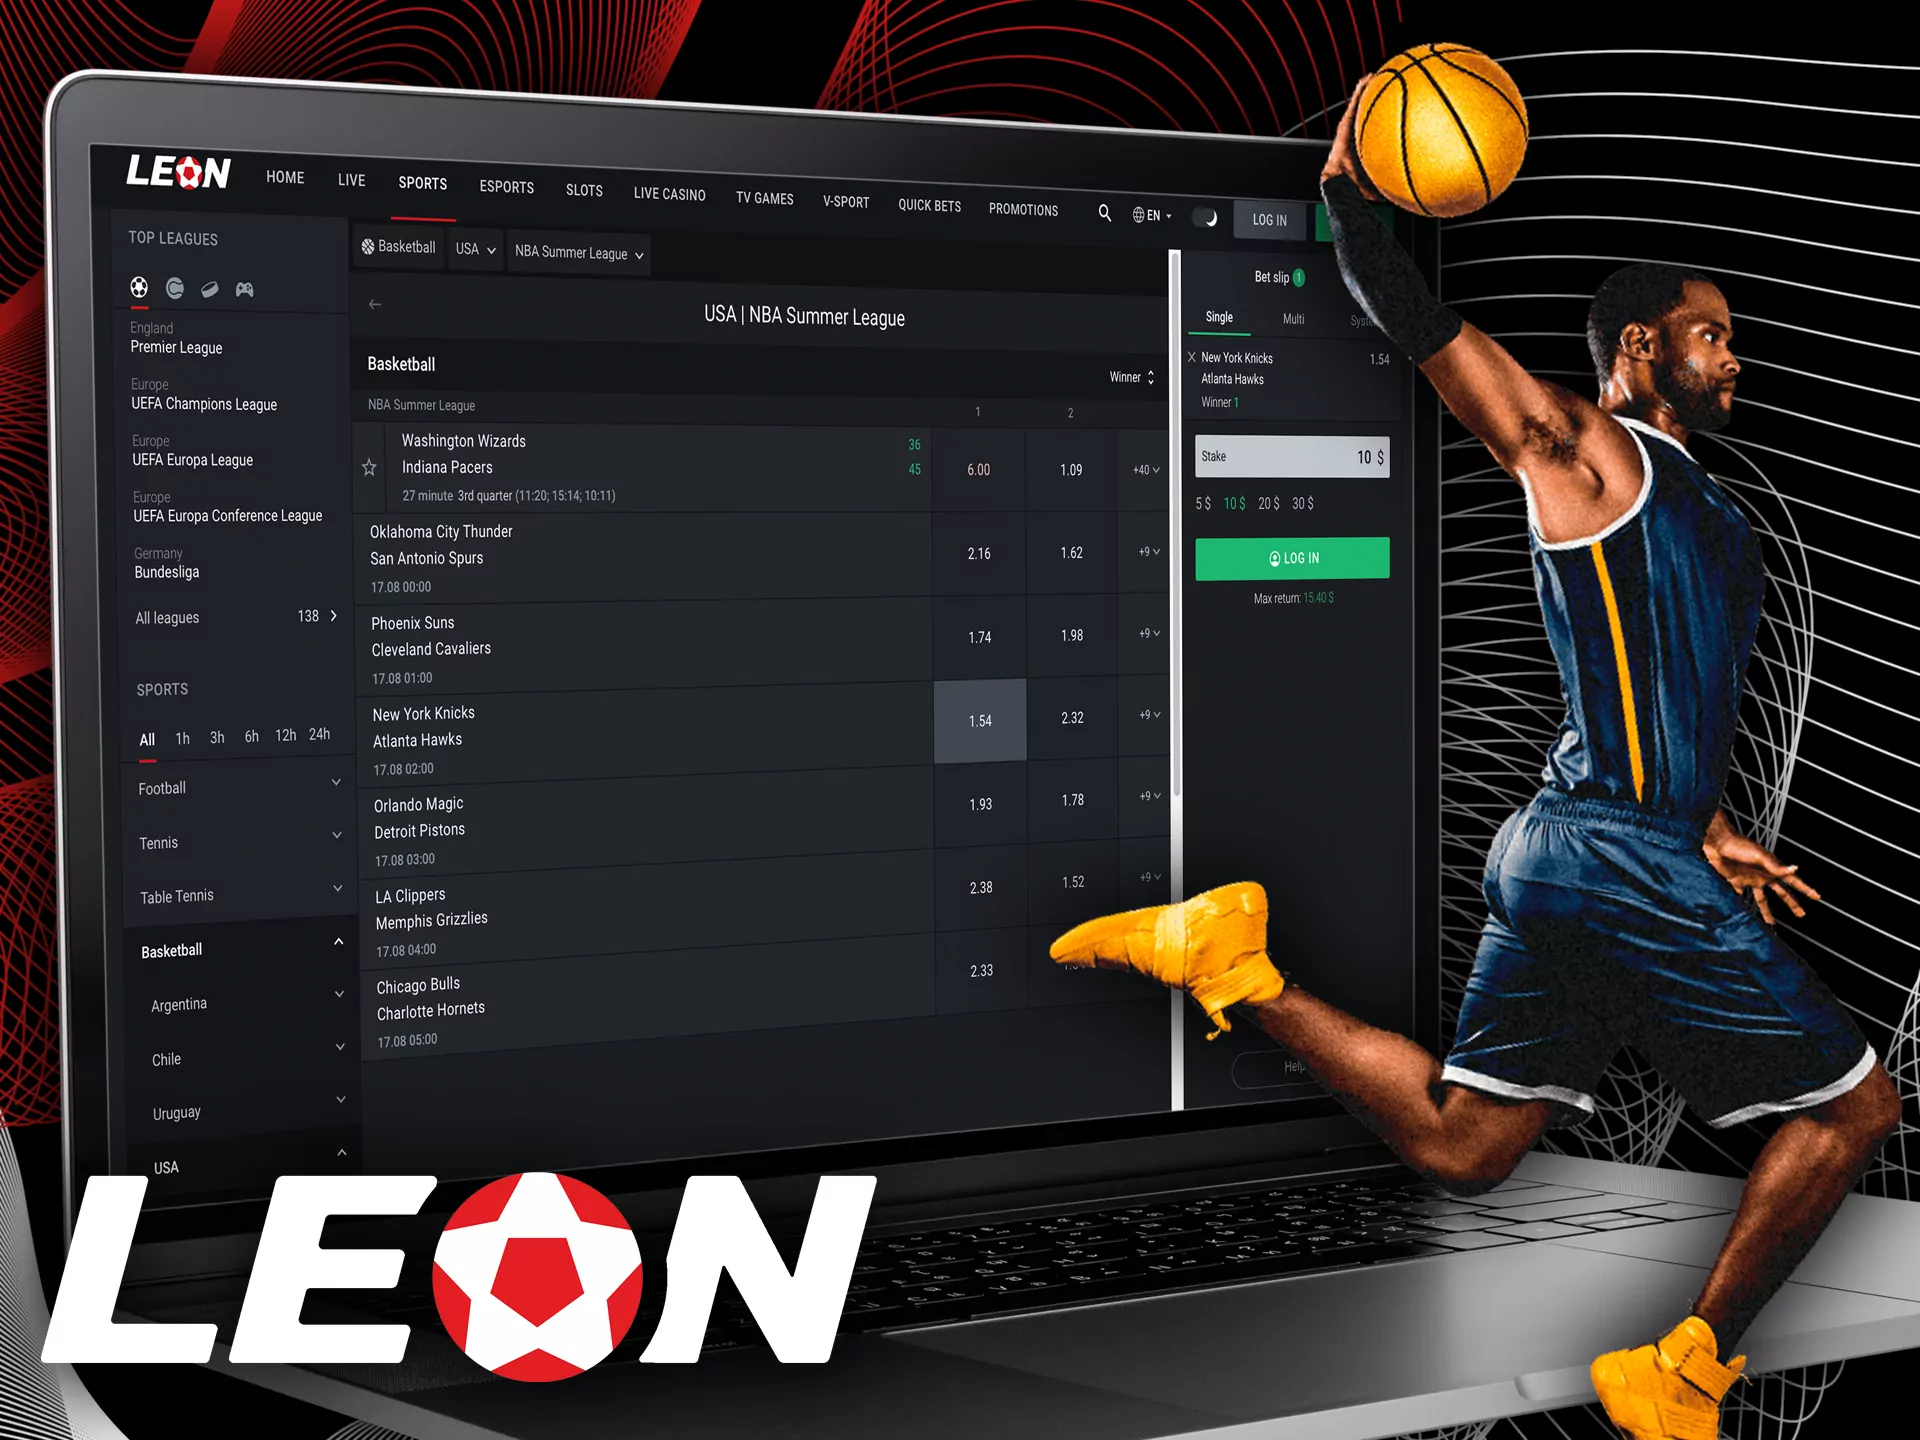 Plce bets on your favorite NBA's stars via the Leon app.